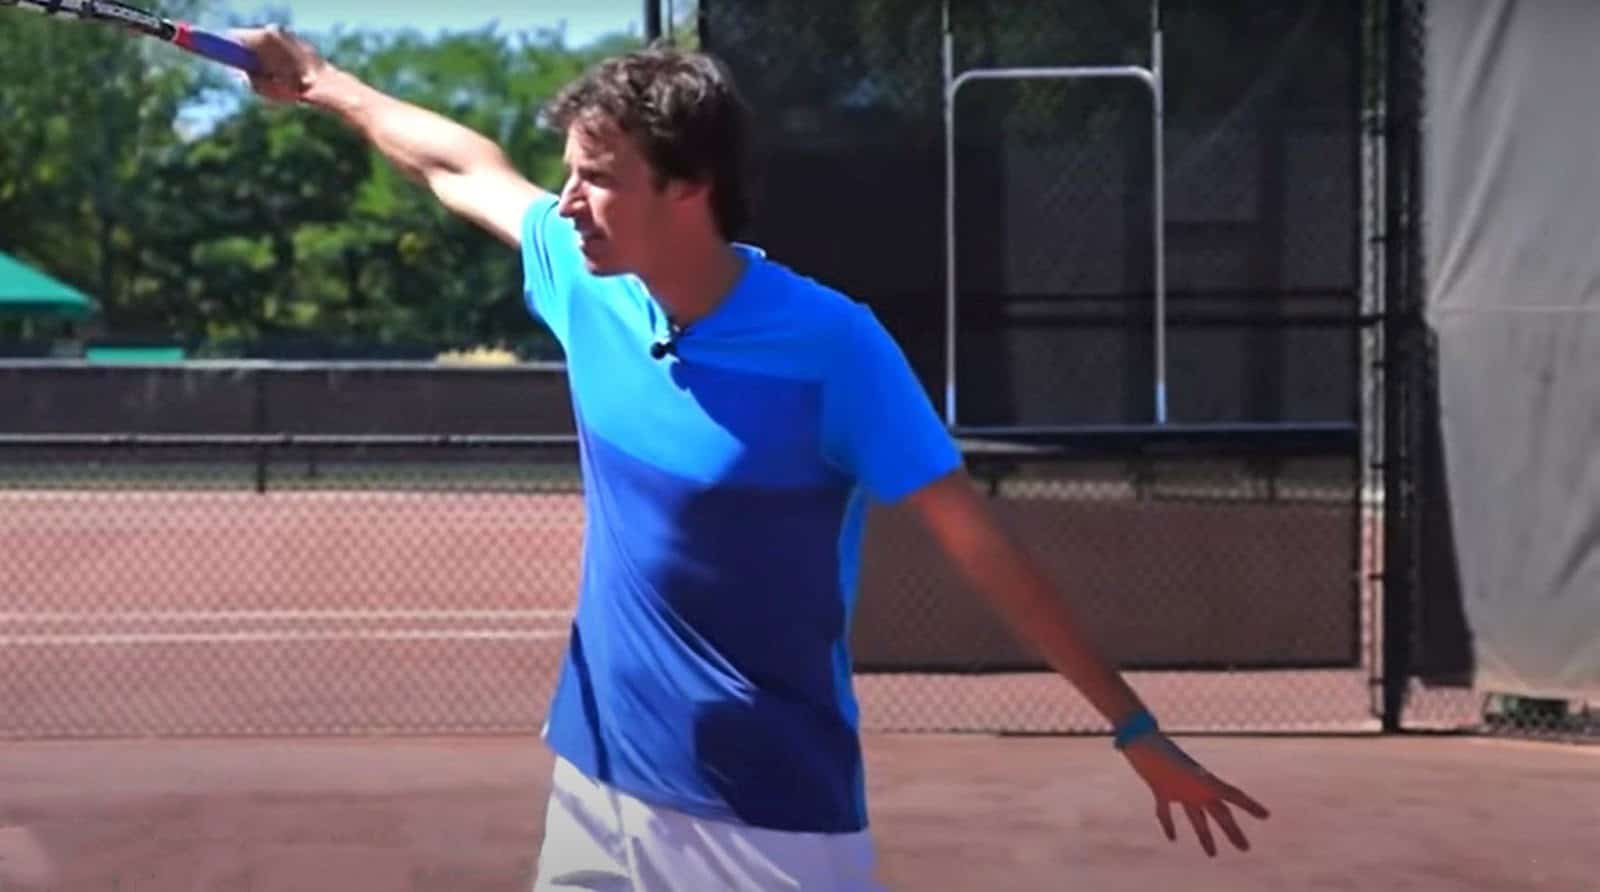 Jeff Salzenstein demonstrating a one-handed backhand slice tennis follow through